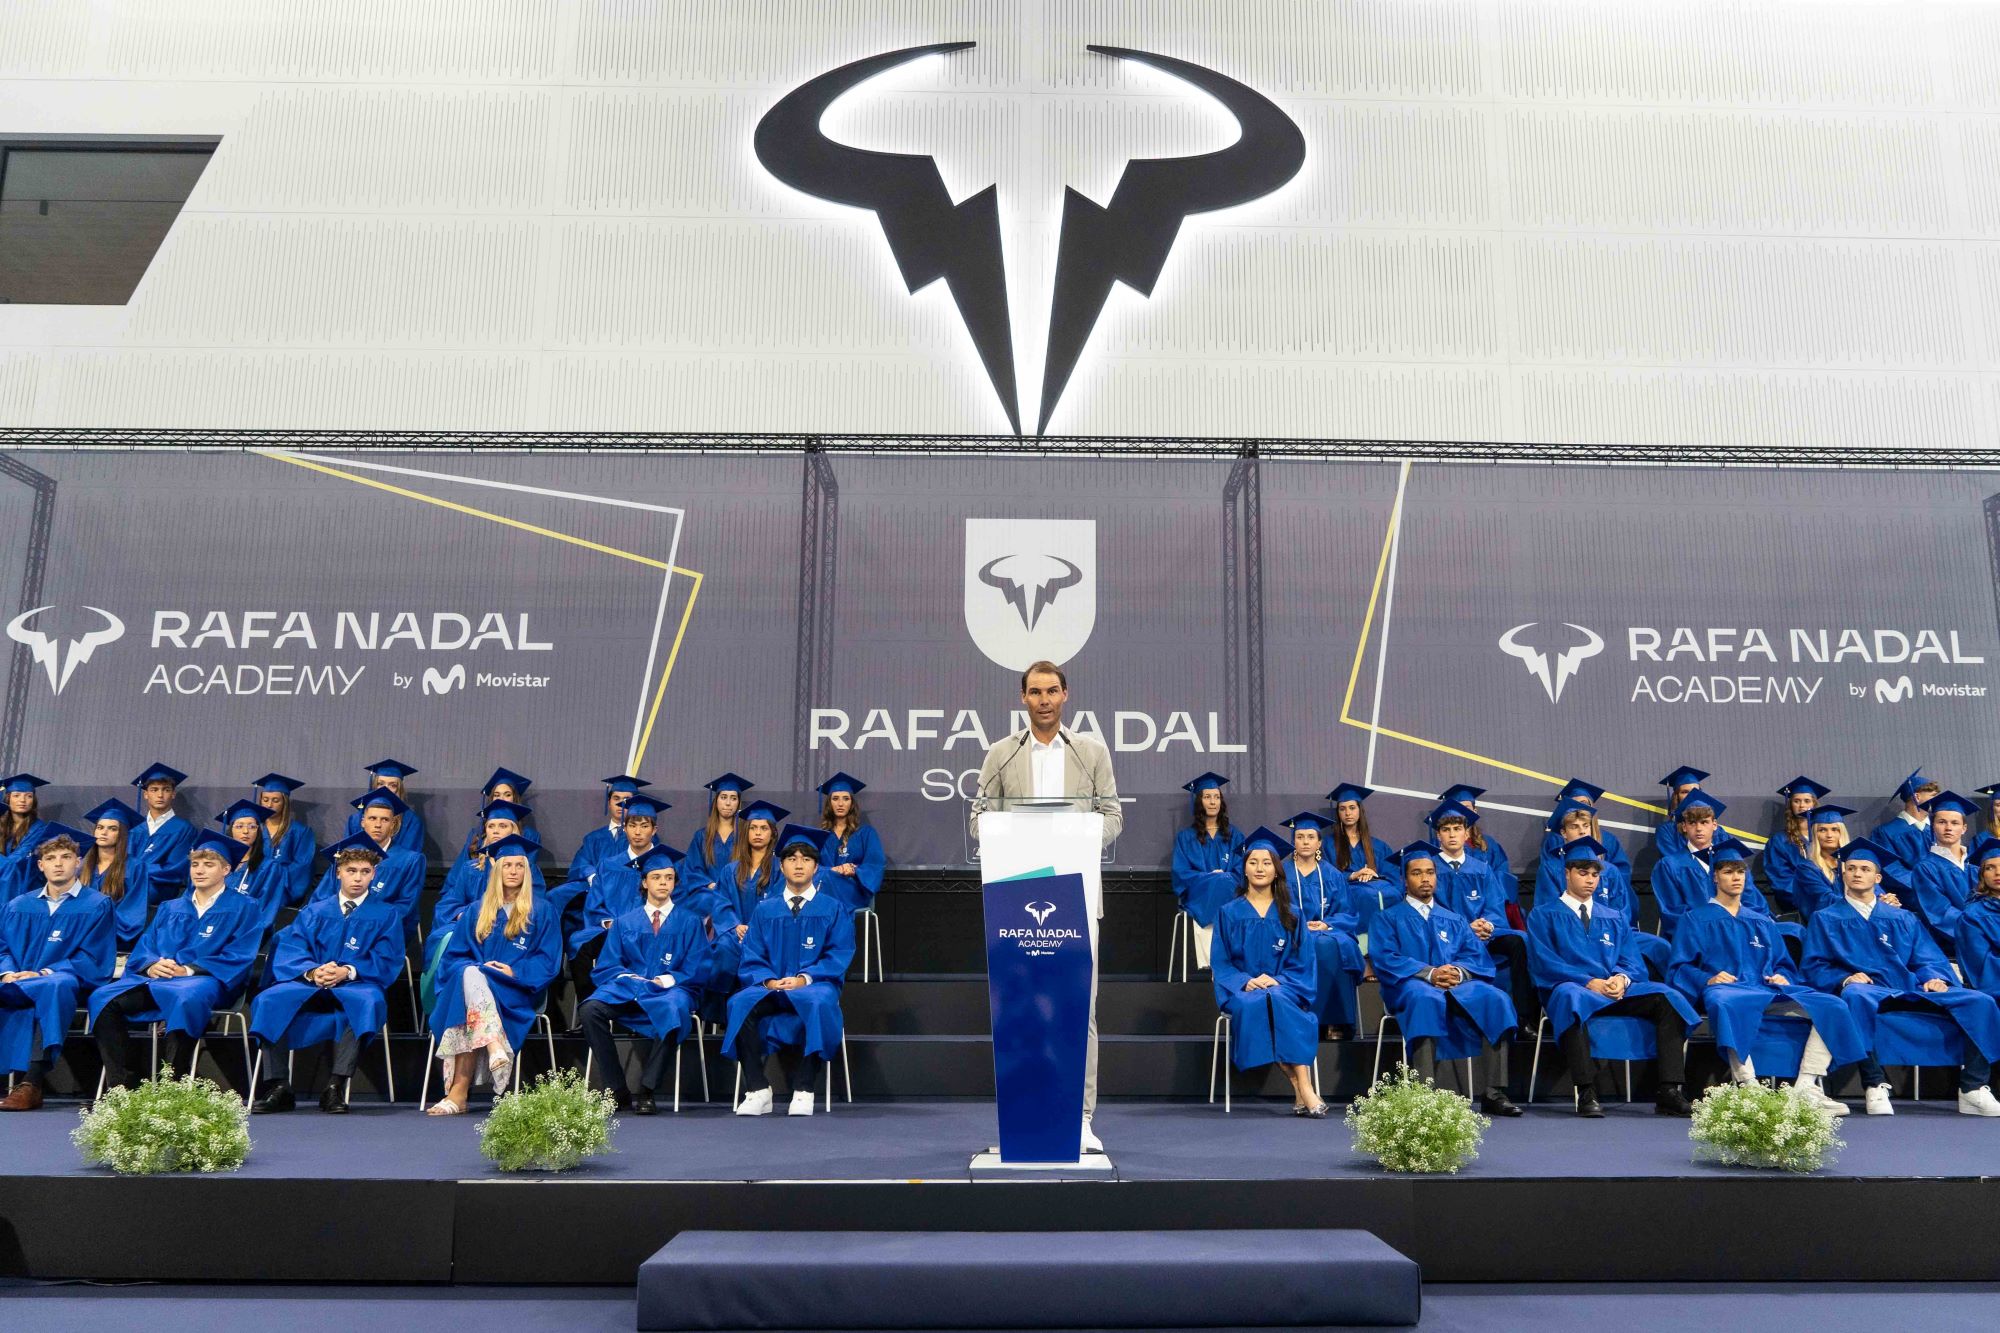 Rafa Nadal and Carlos Moyà highlight the importance of values at the Rafa Nadal Academy by Movistar graduation